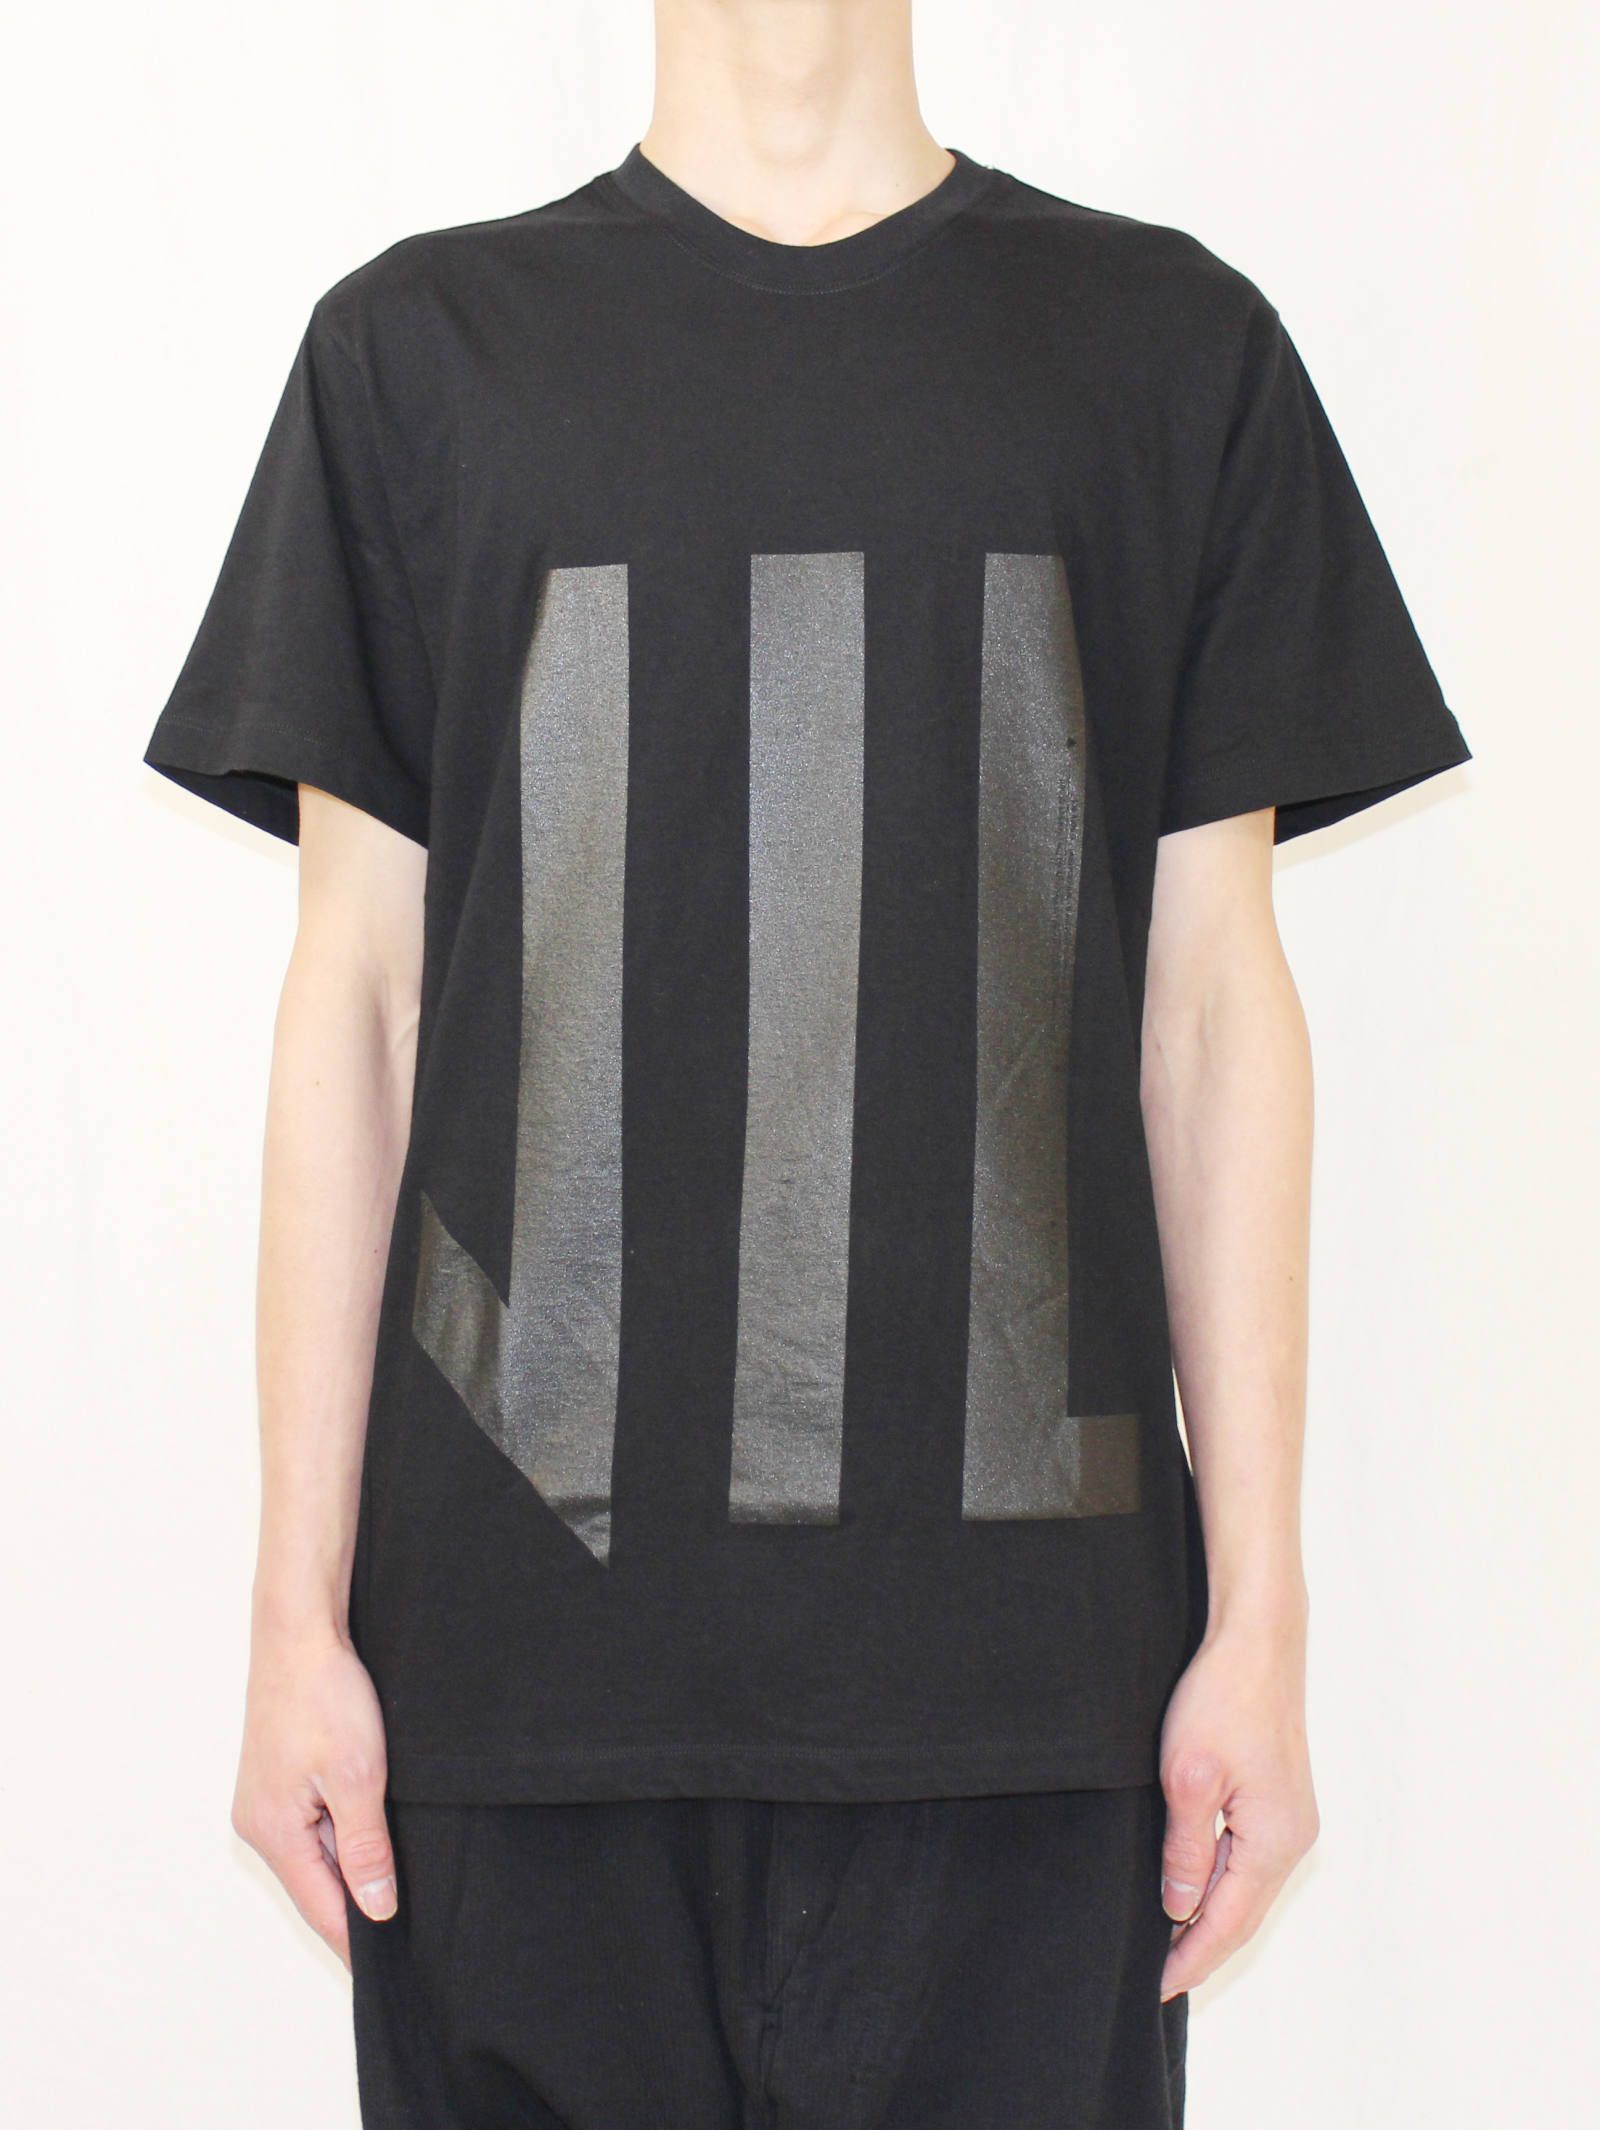 NILoS - ニルズTシャツ - NIL T-SHIRT - BLACK | ADDICT WEB SHOP